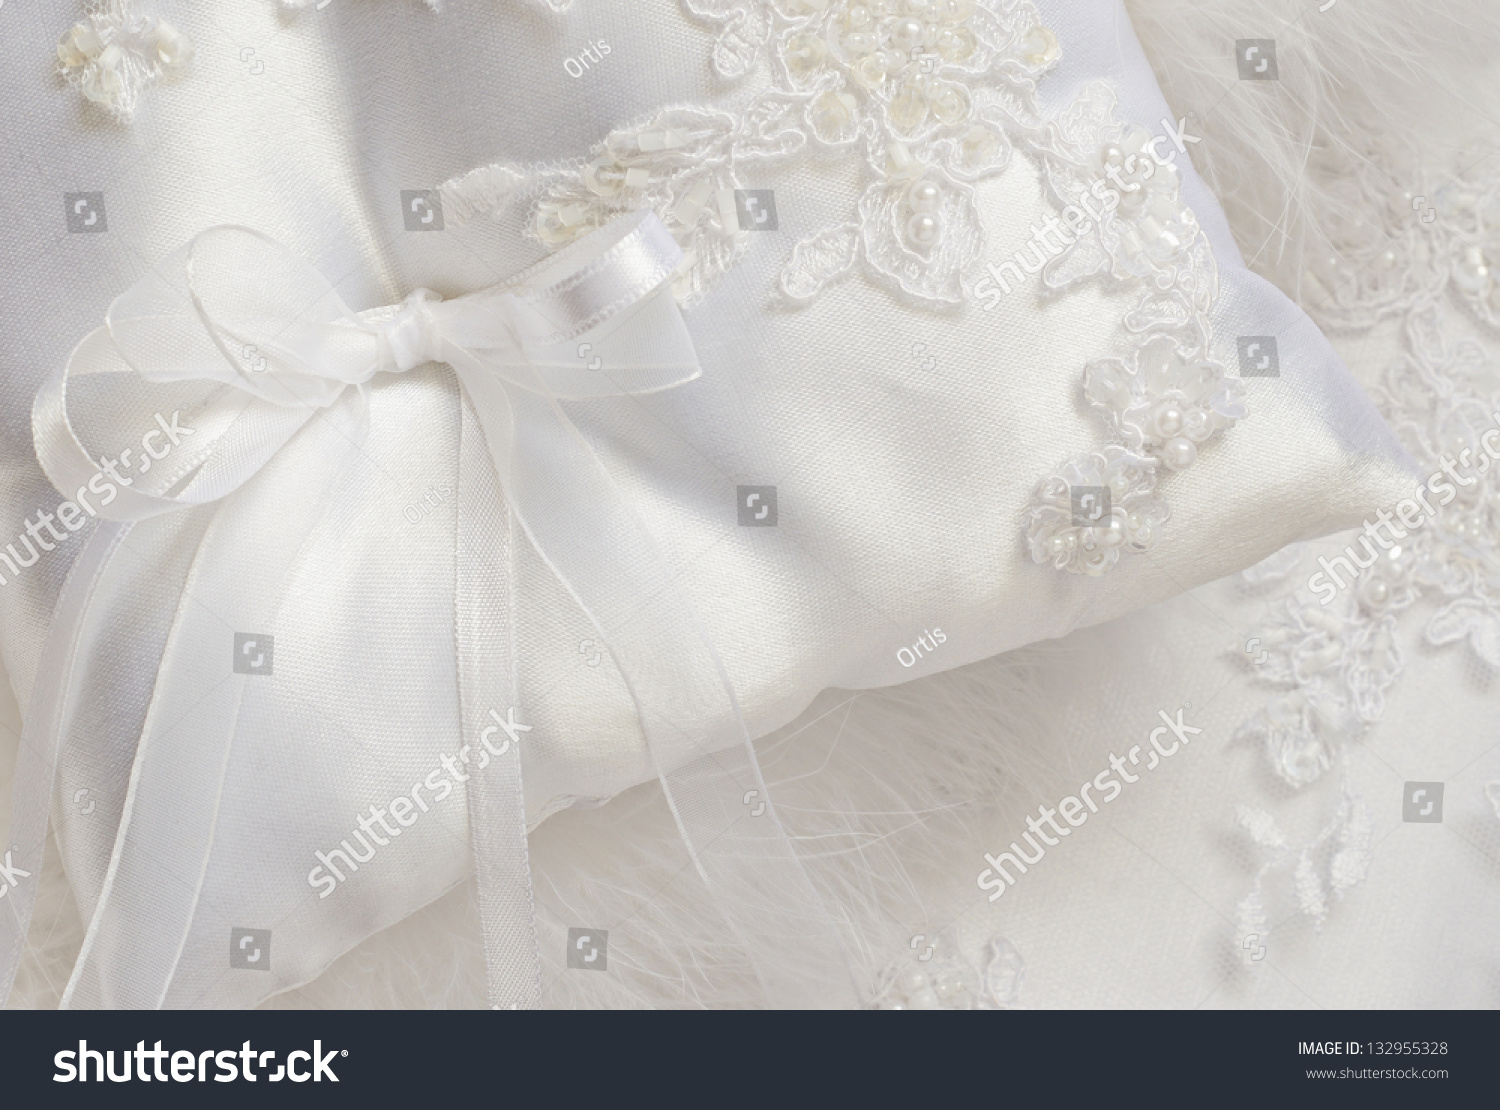 Wedding Satin Pillow On Lace Background Stock Photo 132955328 ...